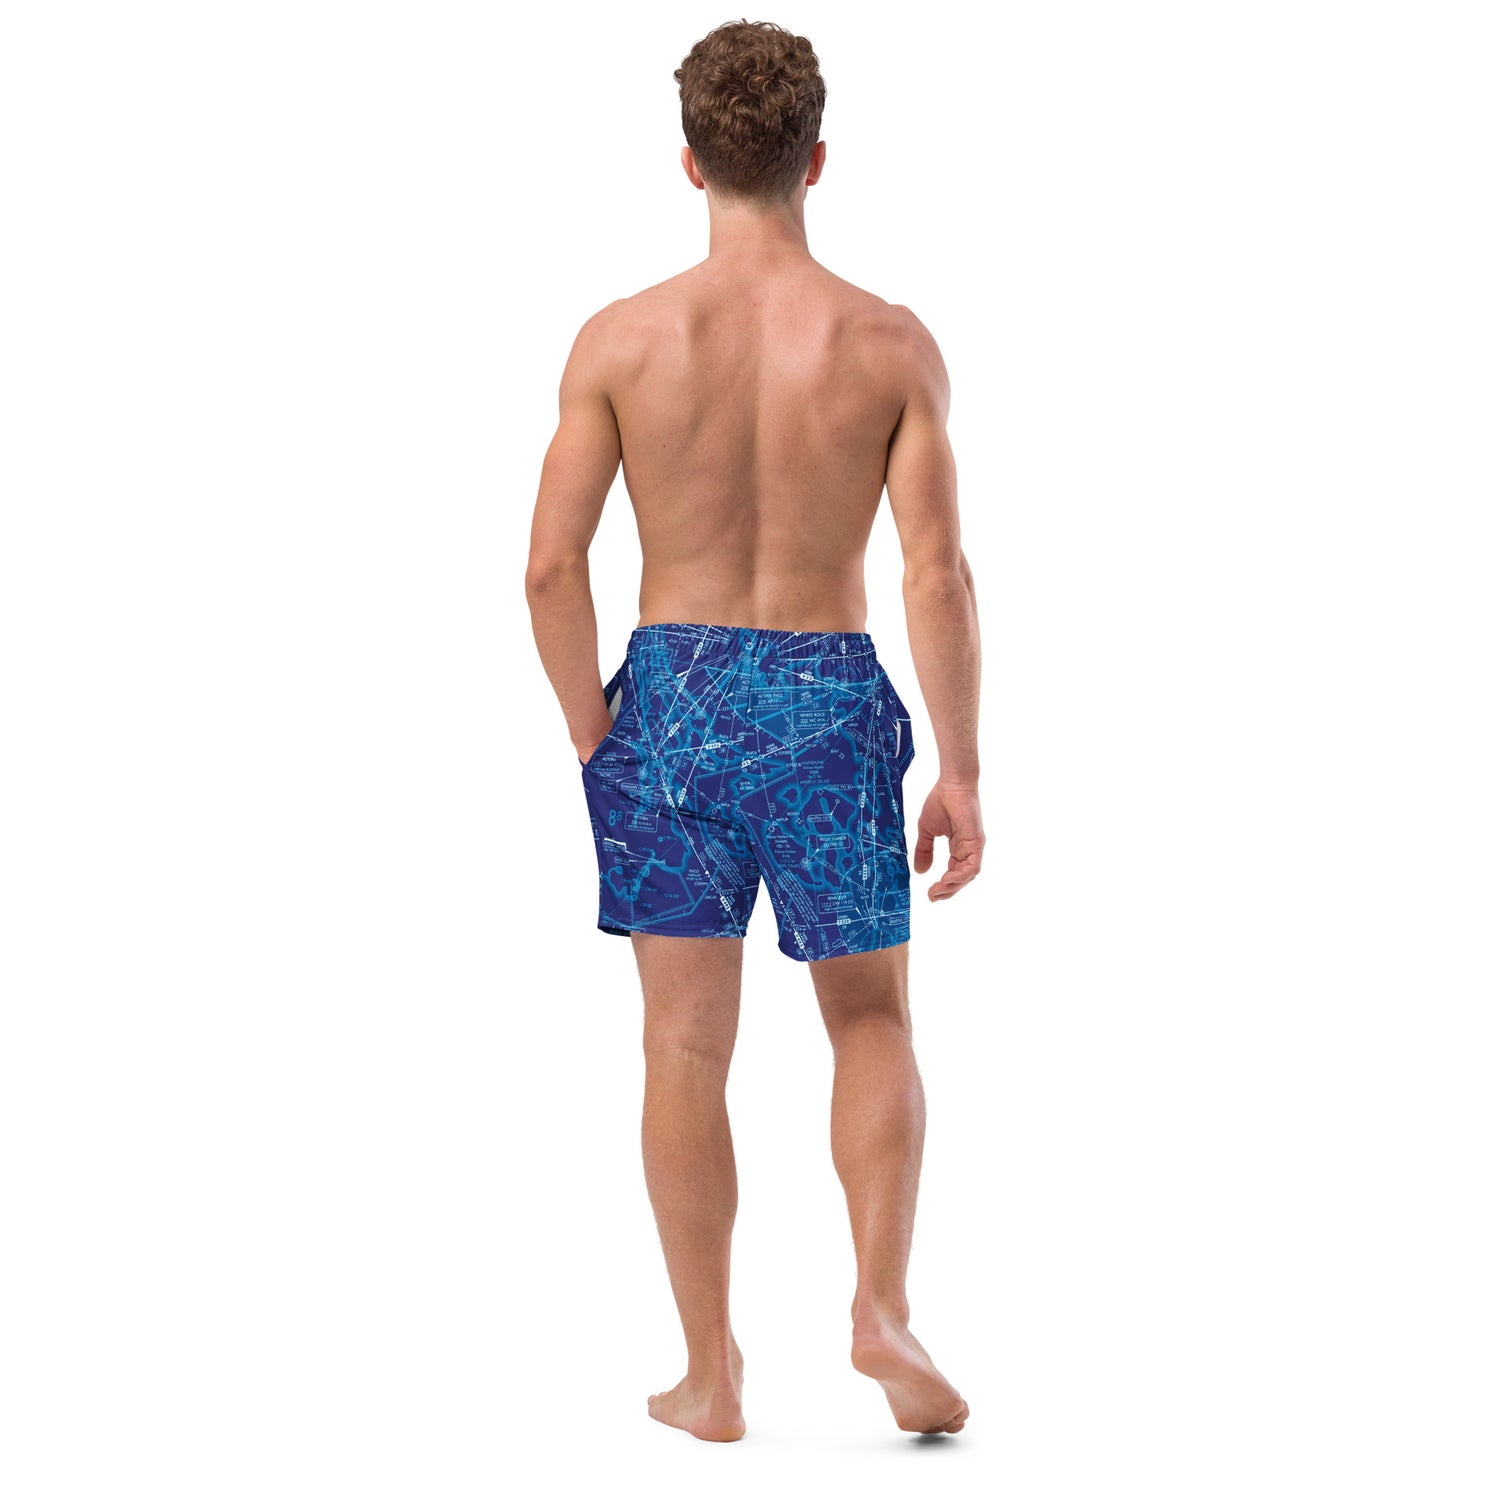 Enroute Low Altitude (ELUS1) Chart men's swim trunks (blue)